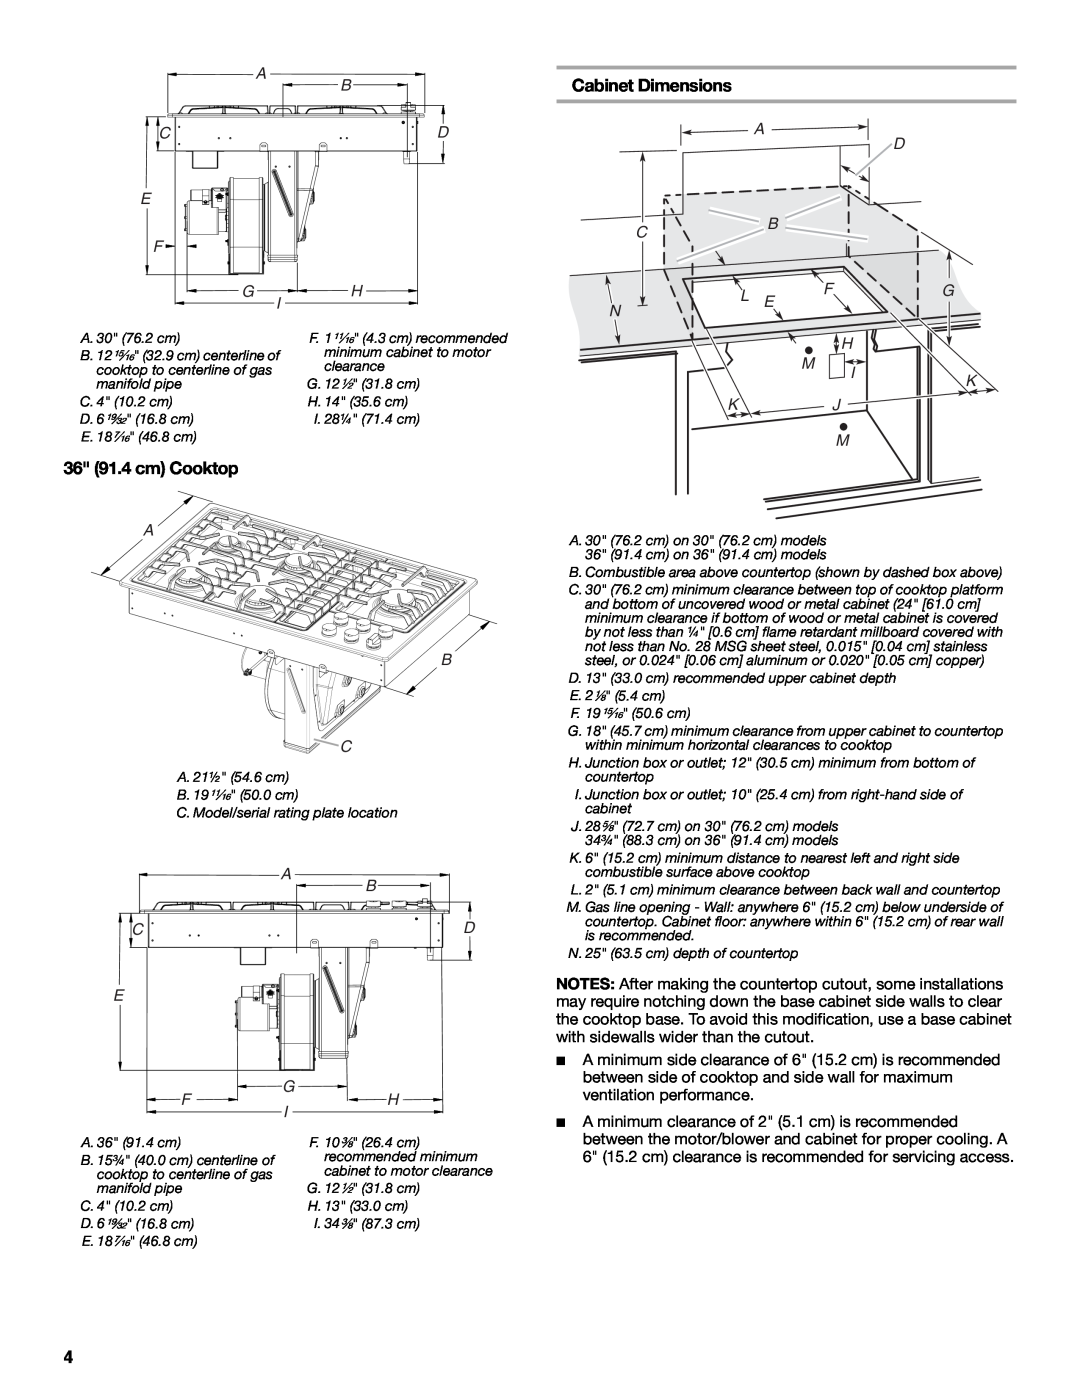 Jenn-Air W10574732A installation instructions 36 91.4 cm Cooktop, Cabinet Dimensions, A B C, A D Cb, Kj M 